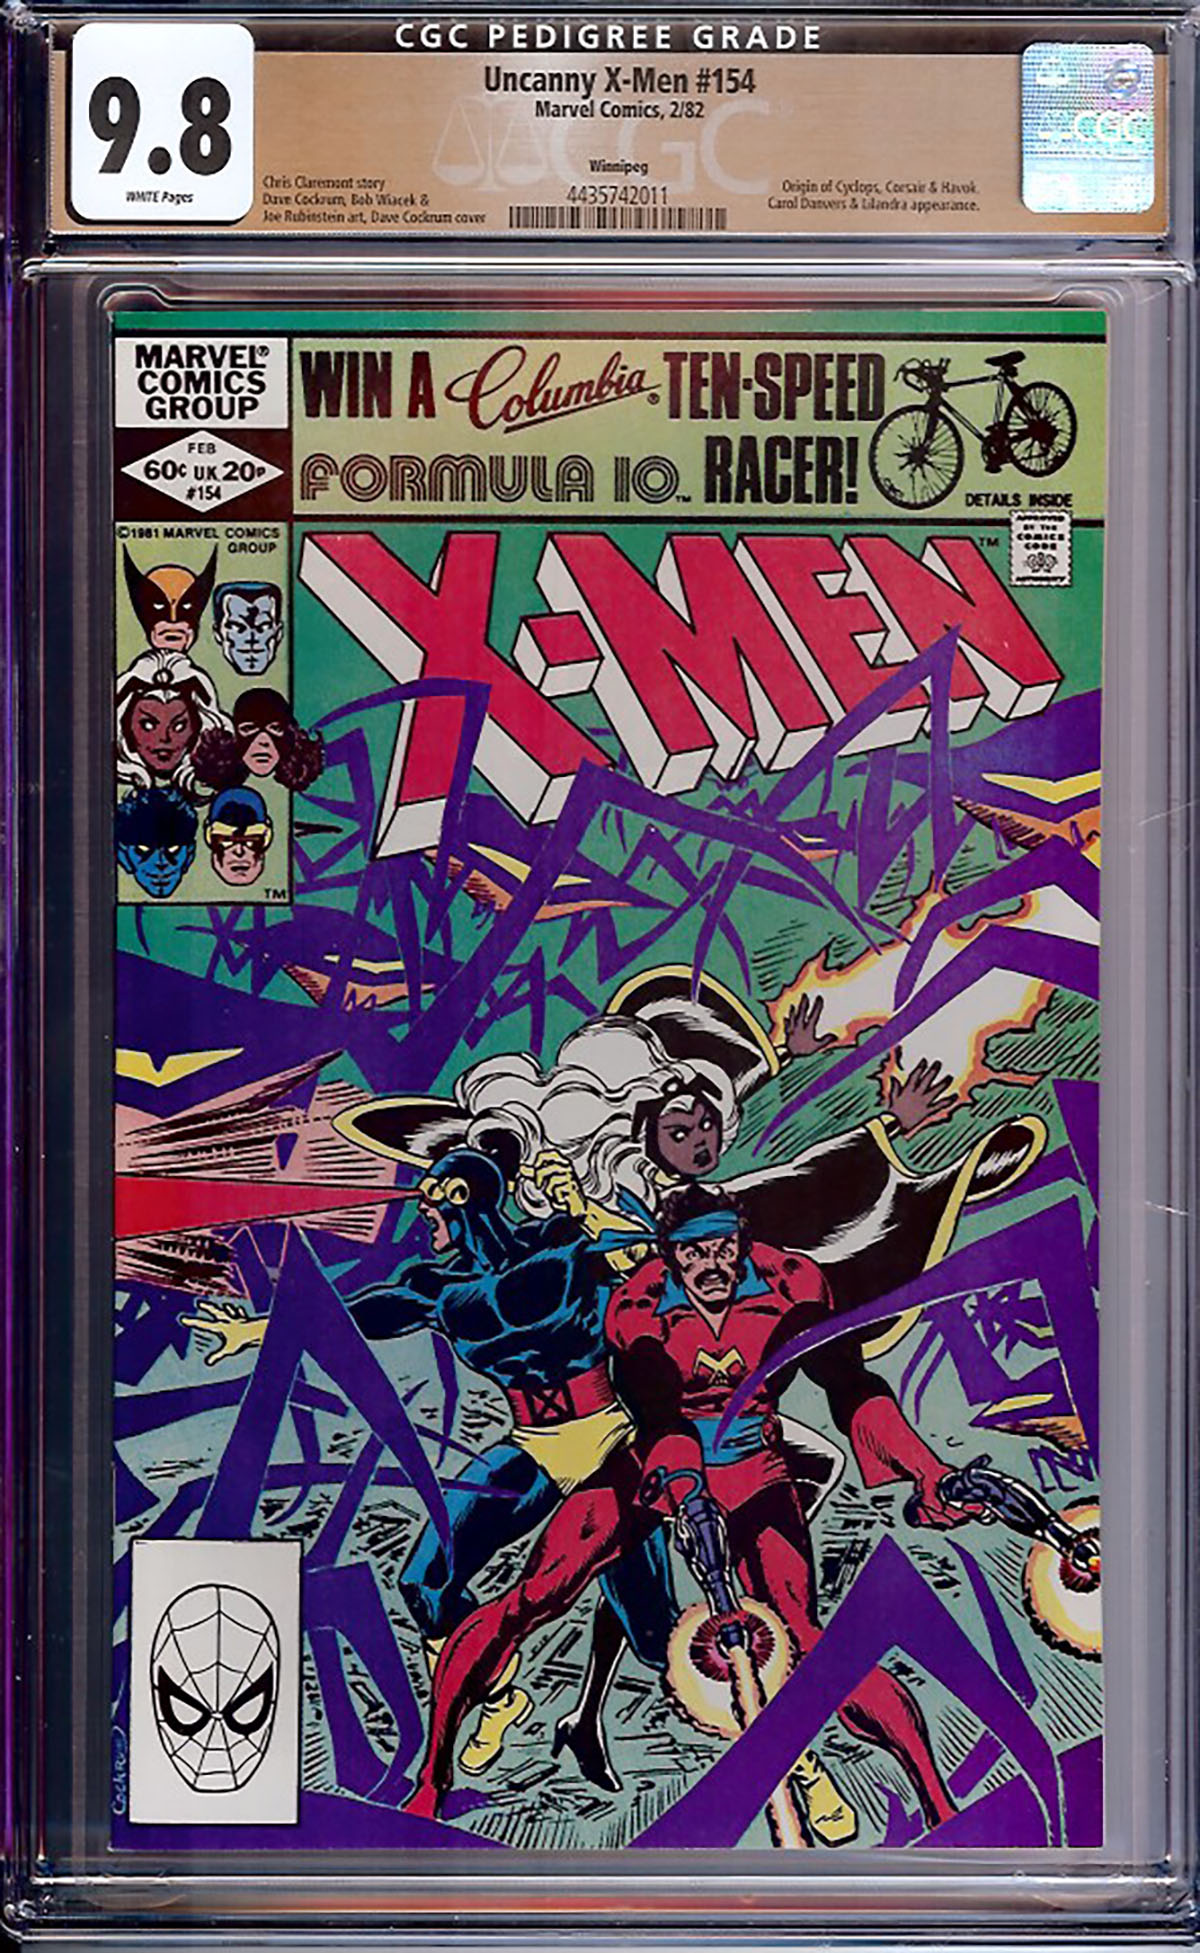 Uncanny X-Men #154 CGC 9.8 w Winnipeg